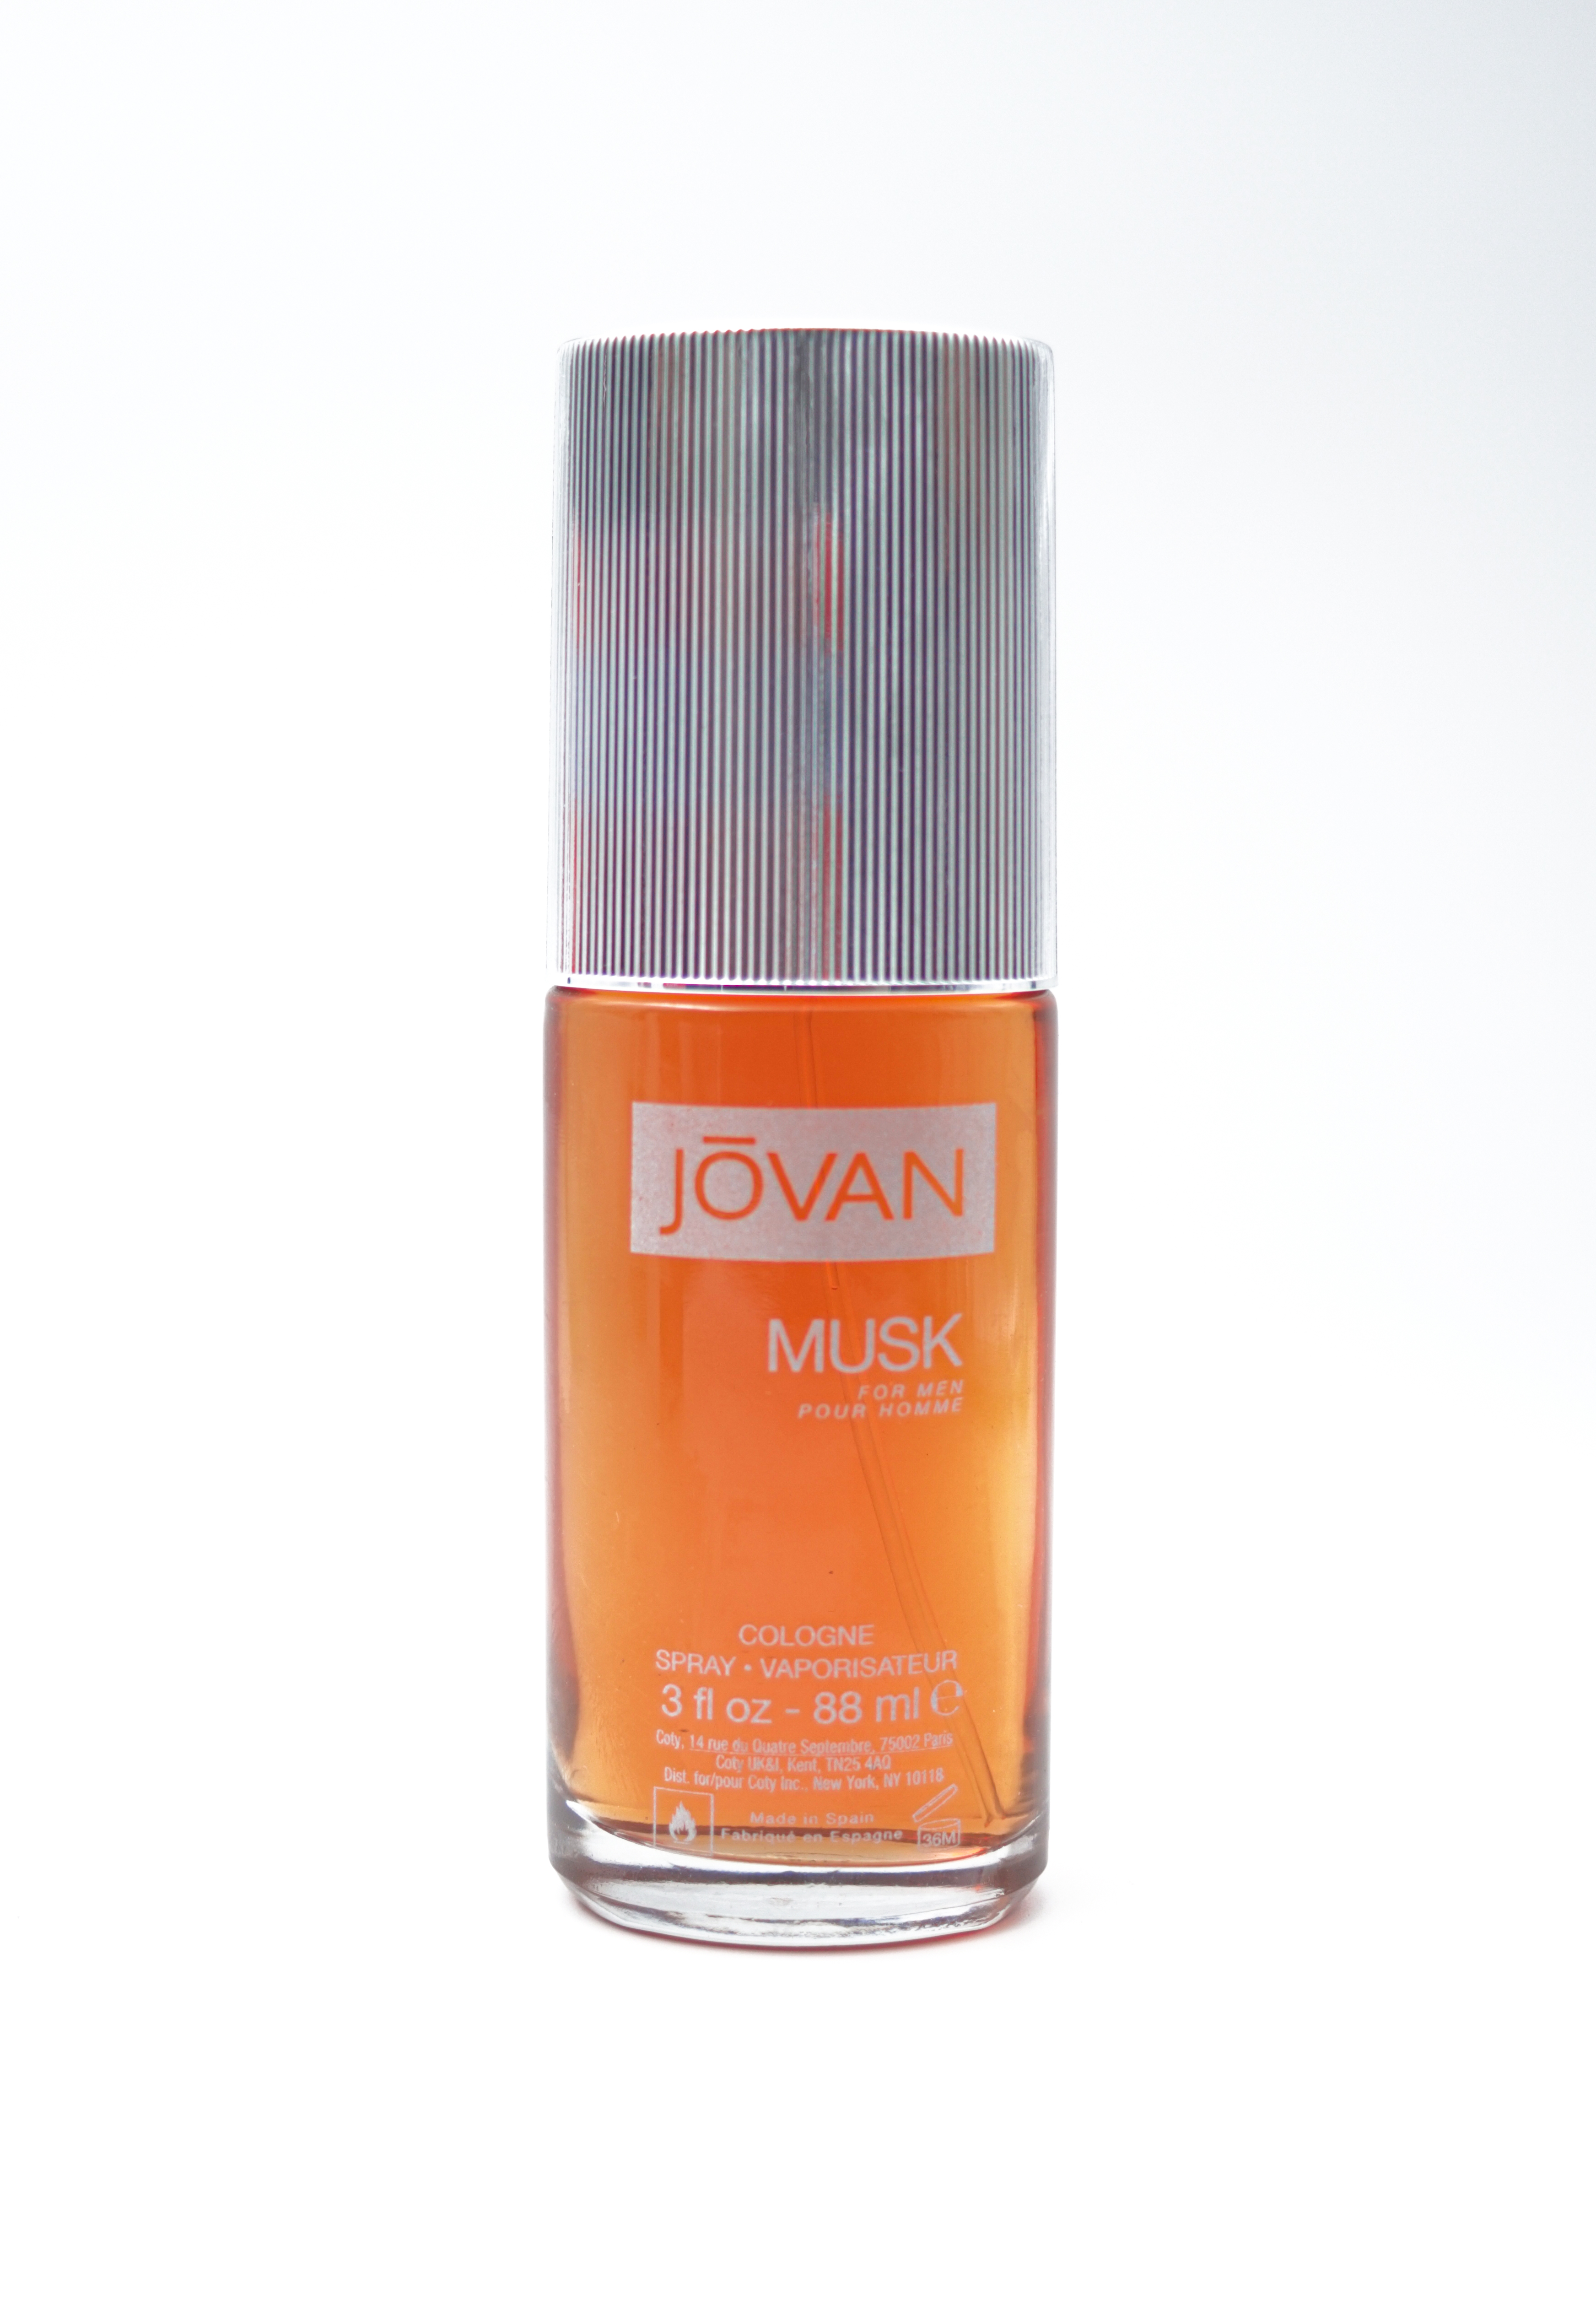 Jovan Musk Pour Homme 88 ml Cologne Vaporisateur Spray Orange Color Perfume For Men SKU 96800